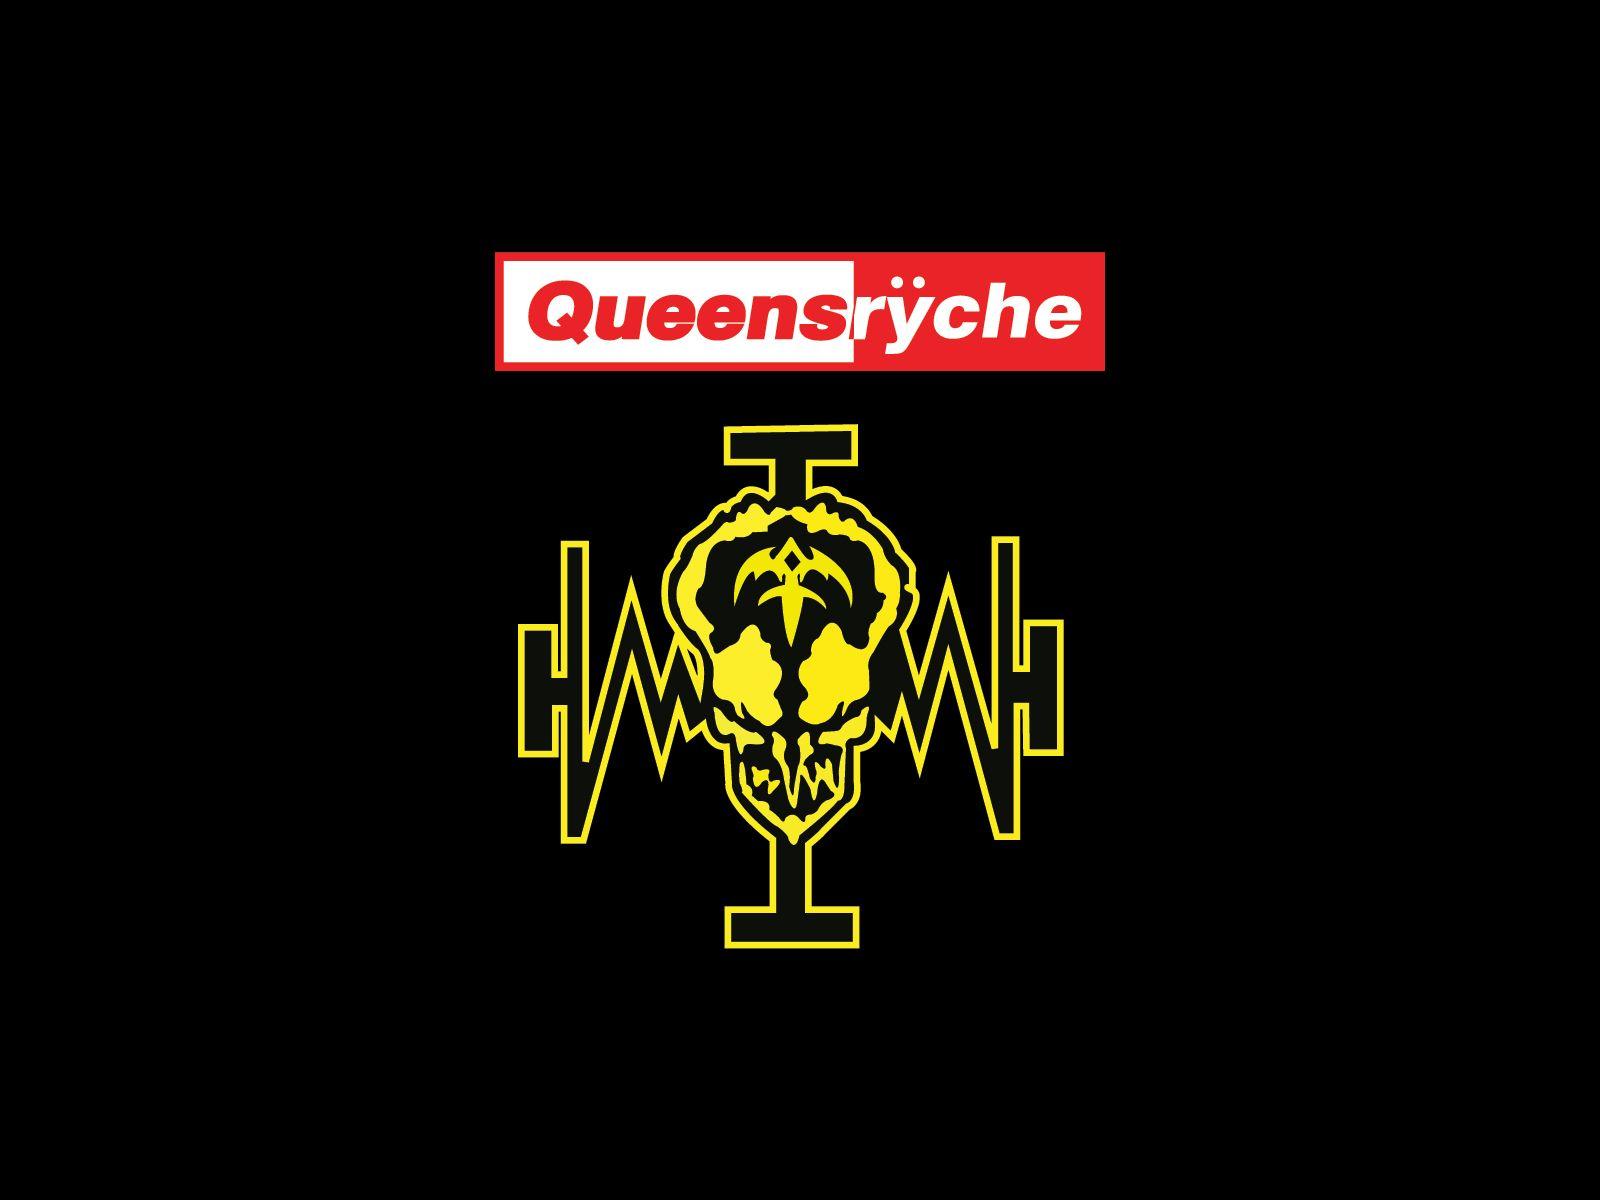 Queensryche band logo and wallpaper. Band logos band logos